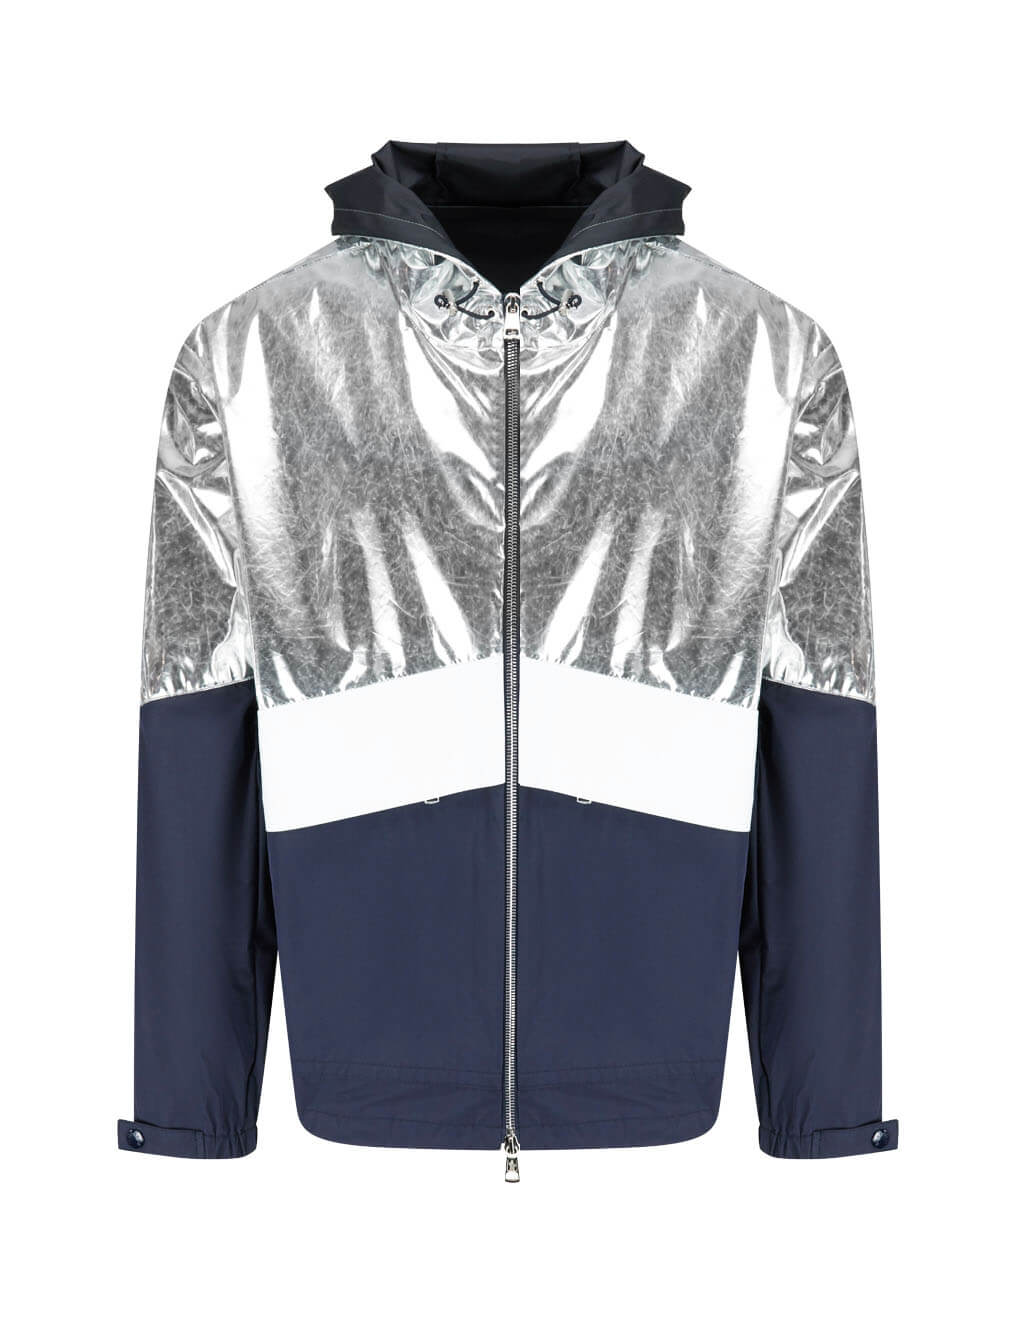 moncler silver jacket